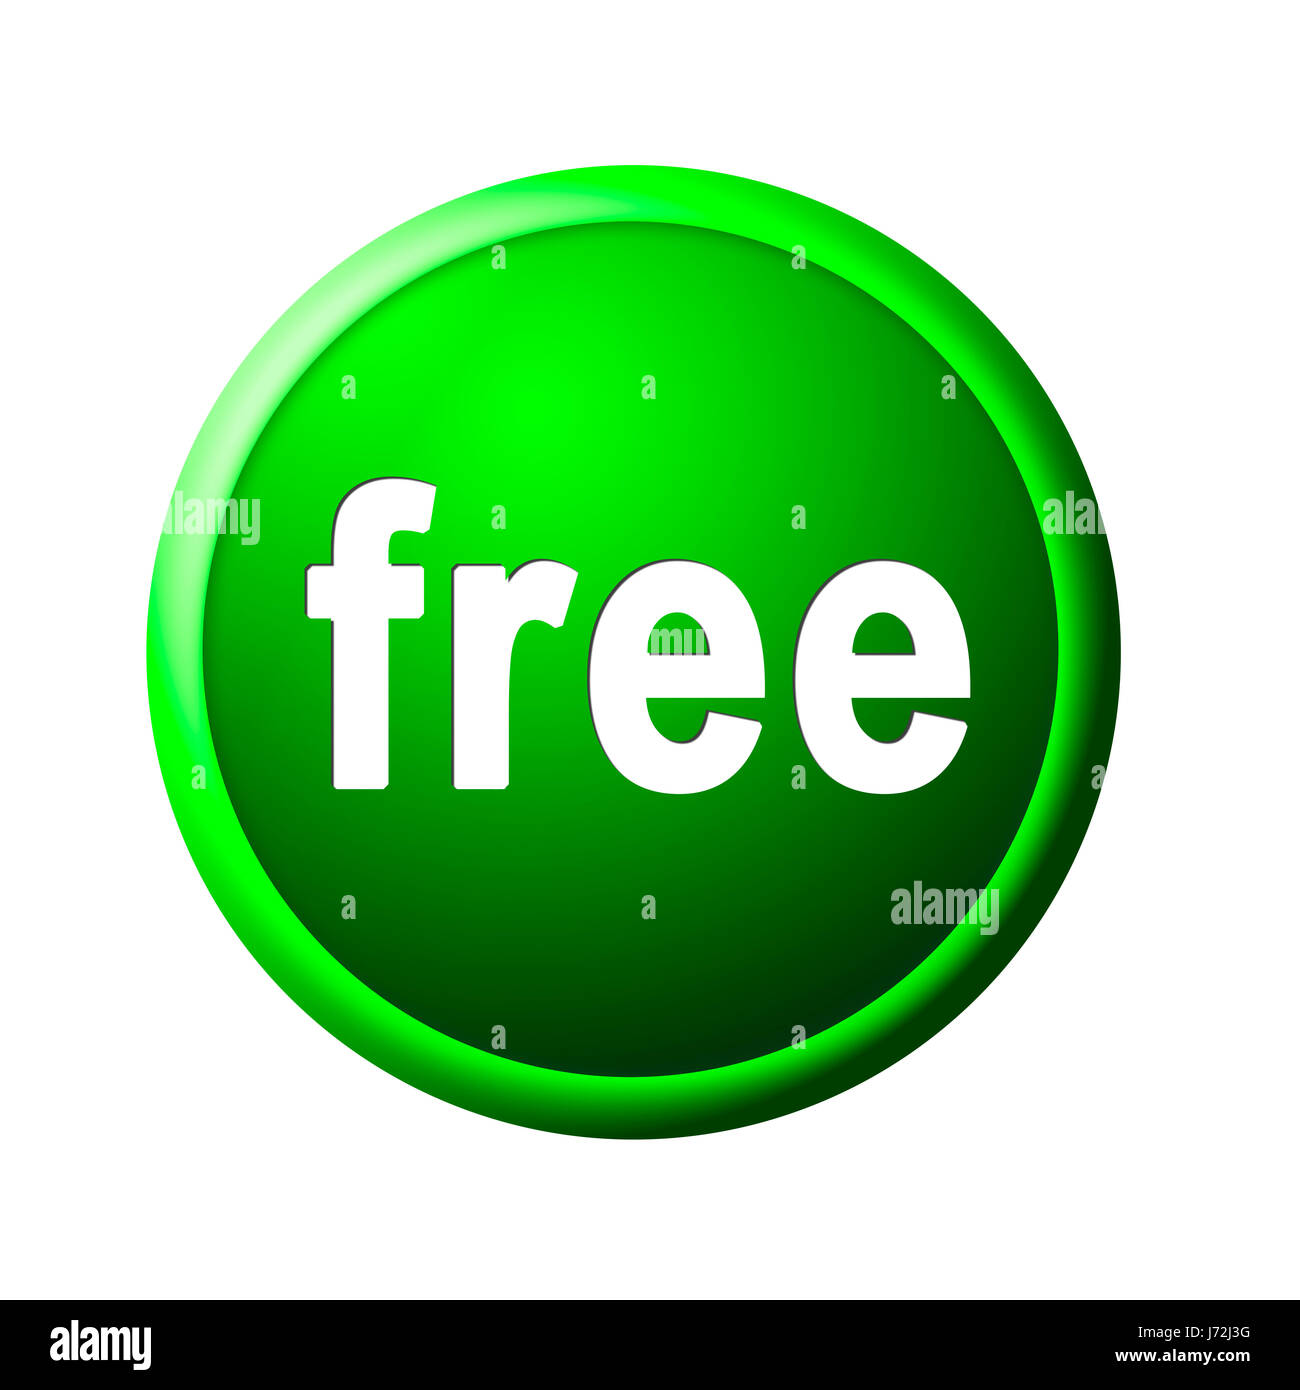 communication free inexpensive cheap affordable internet www worldwideweb net Stock Photo